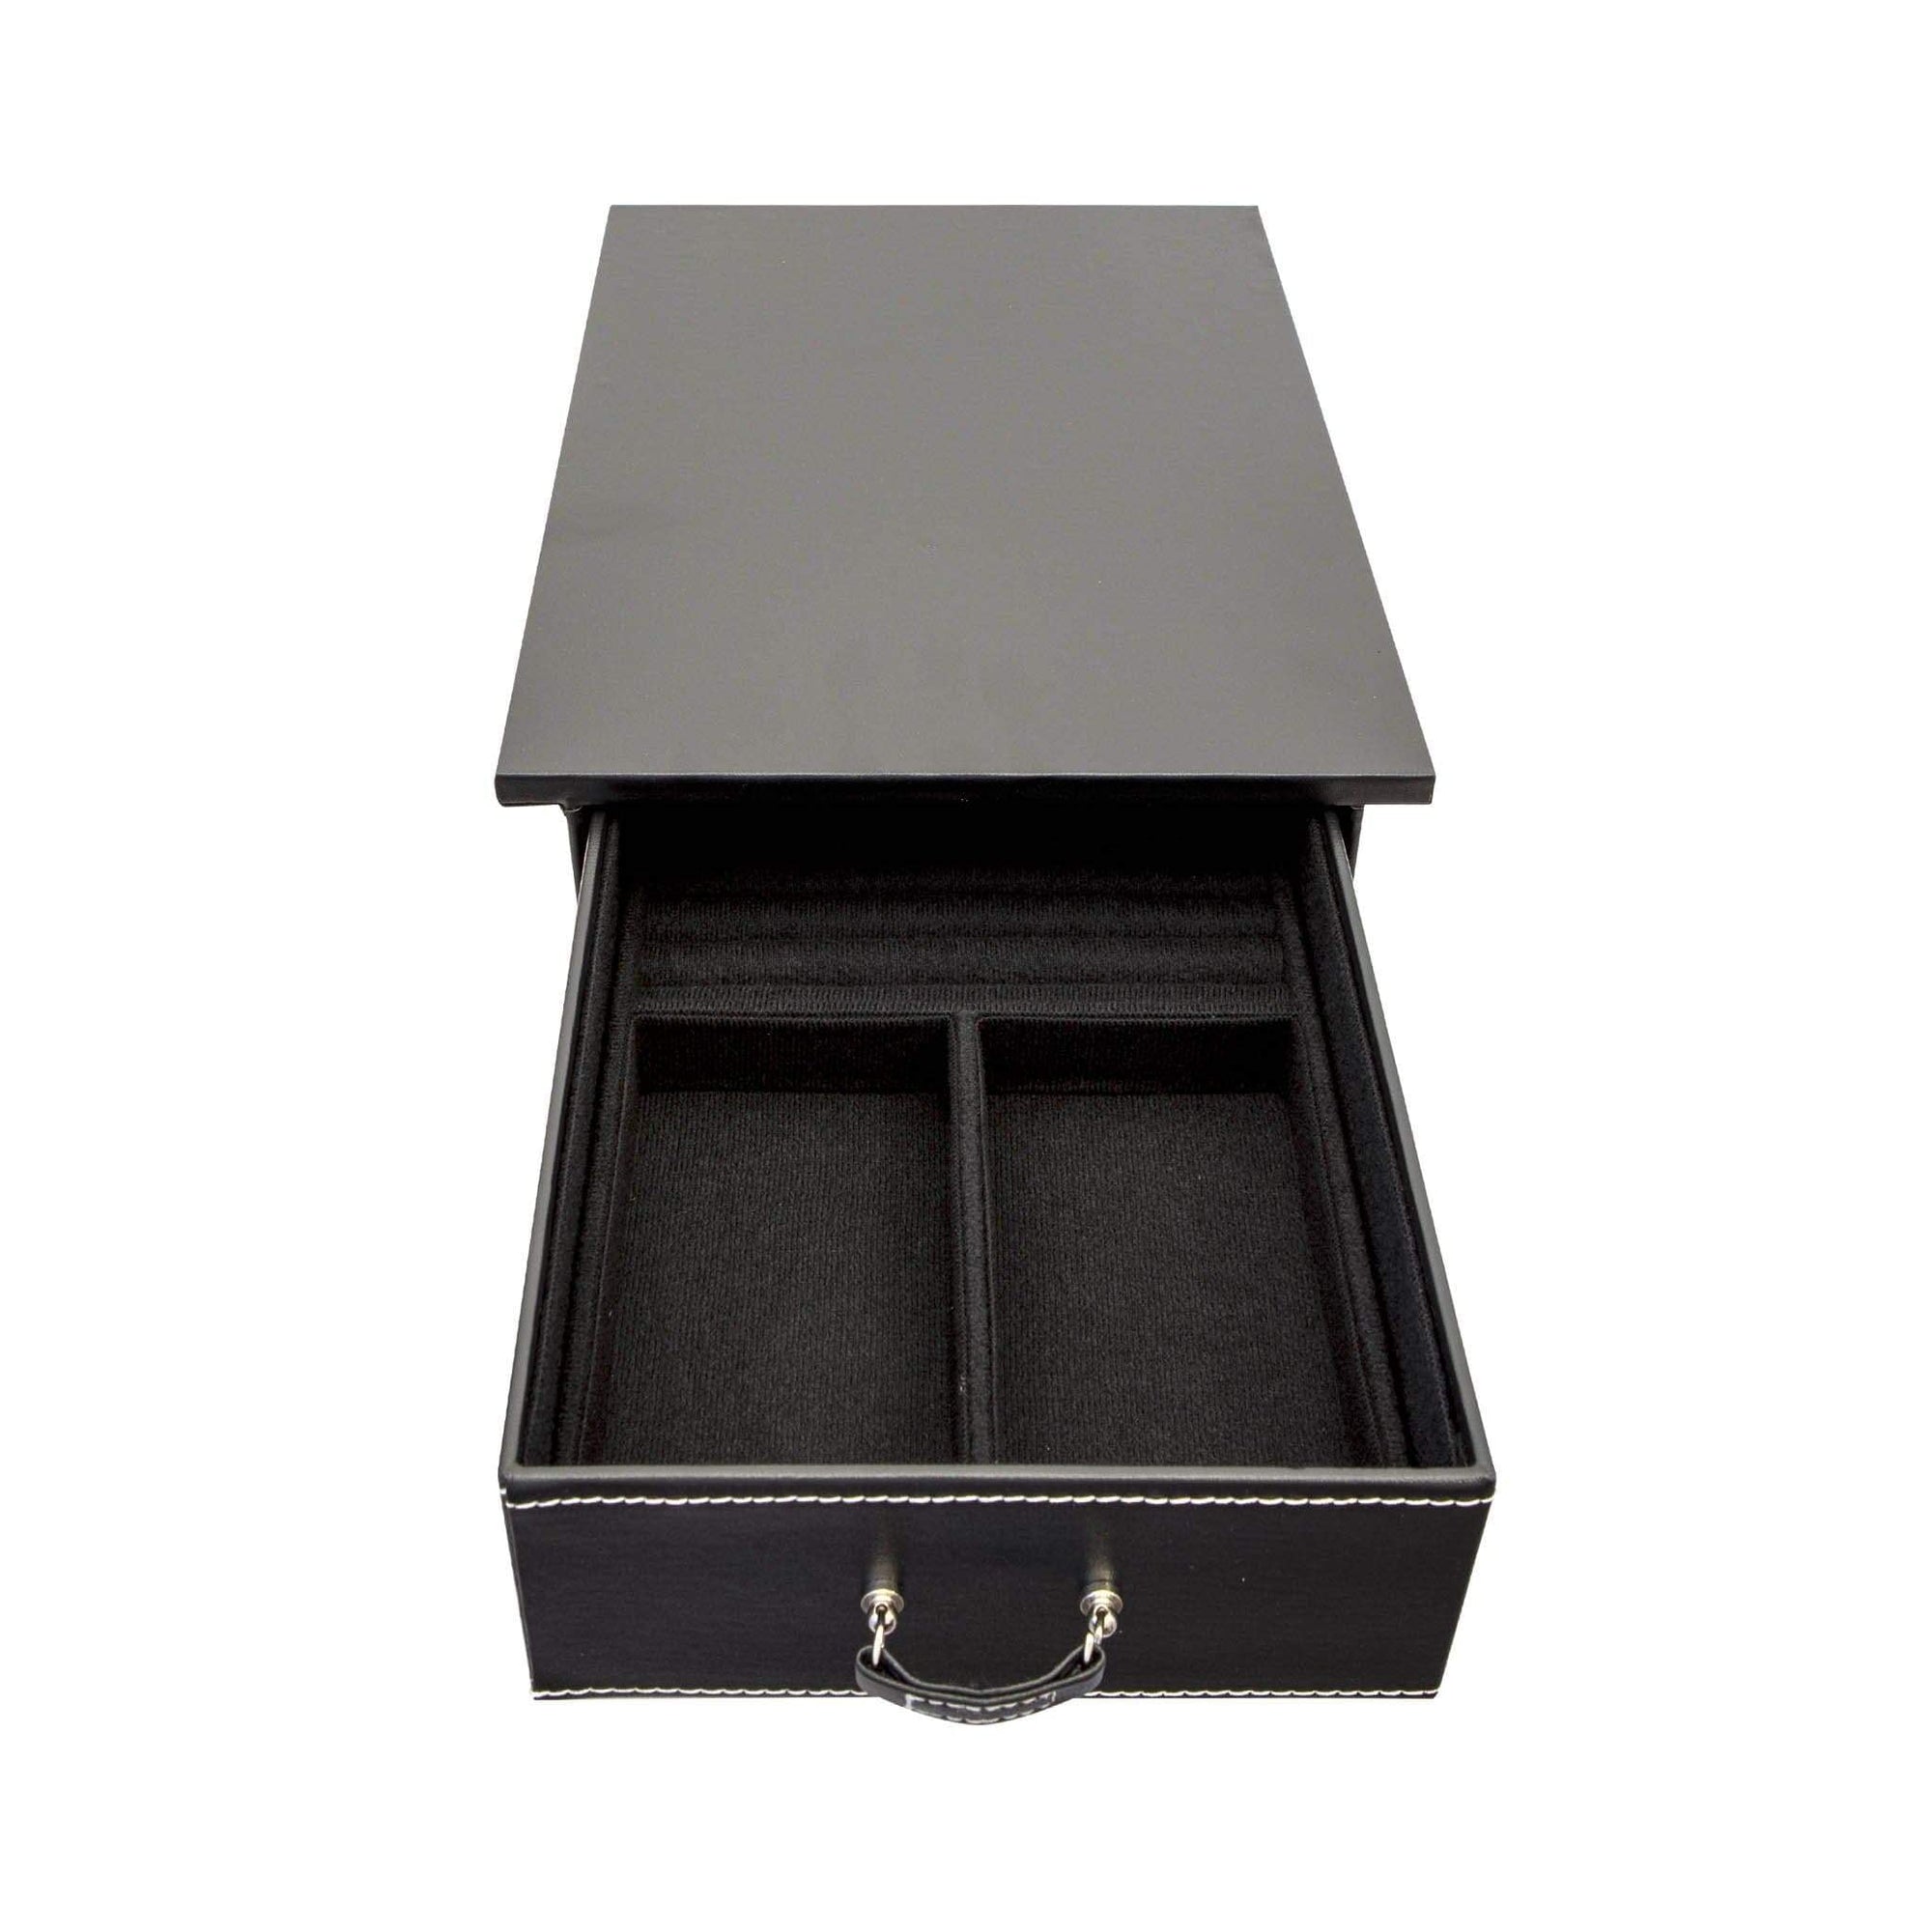 Accessory - storage - jewelry drawer - 6.5 inch - under shelf mount - 20 size safes - MODLOCK